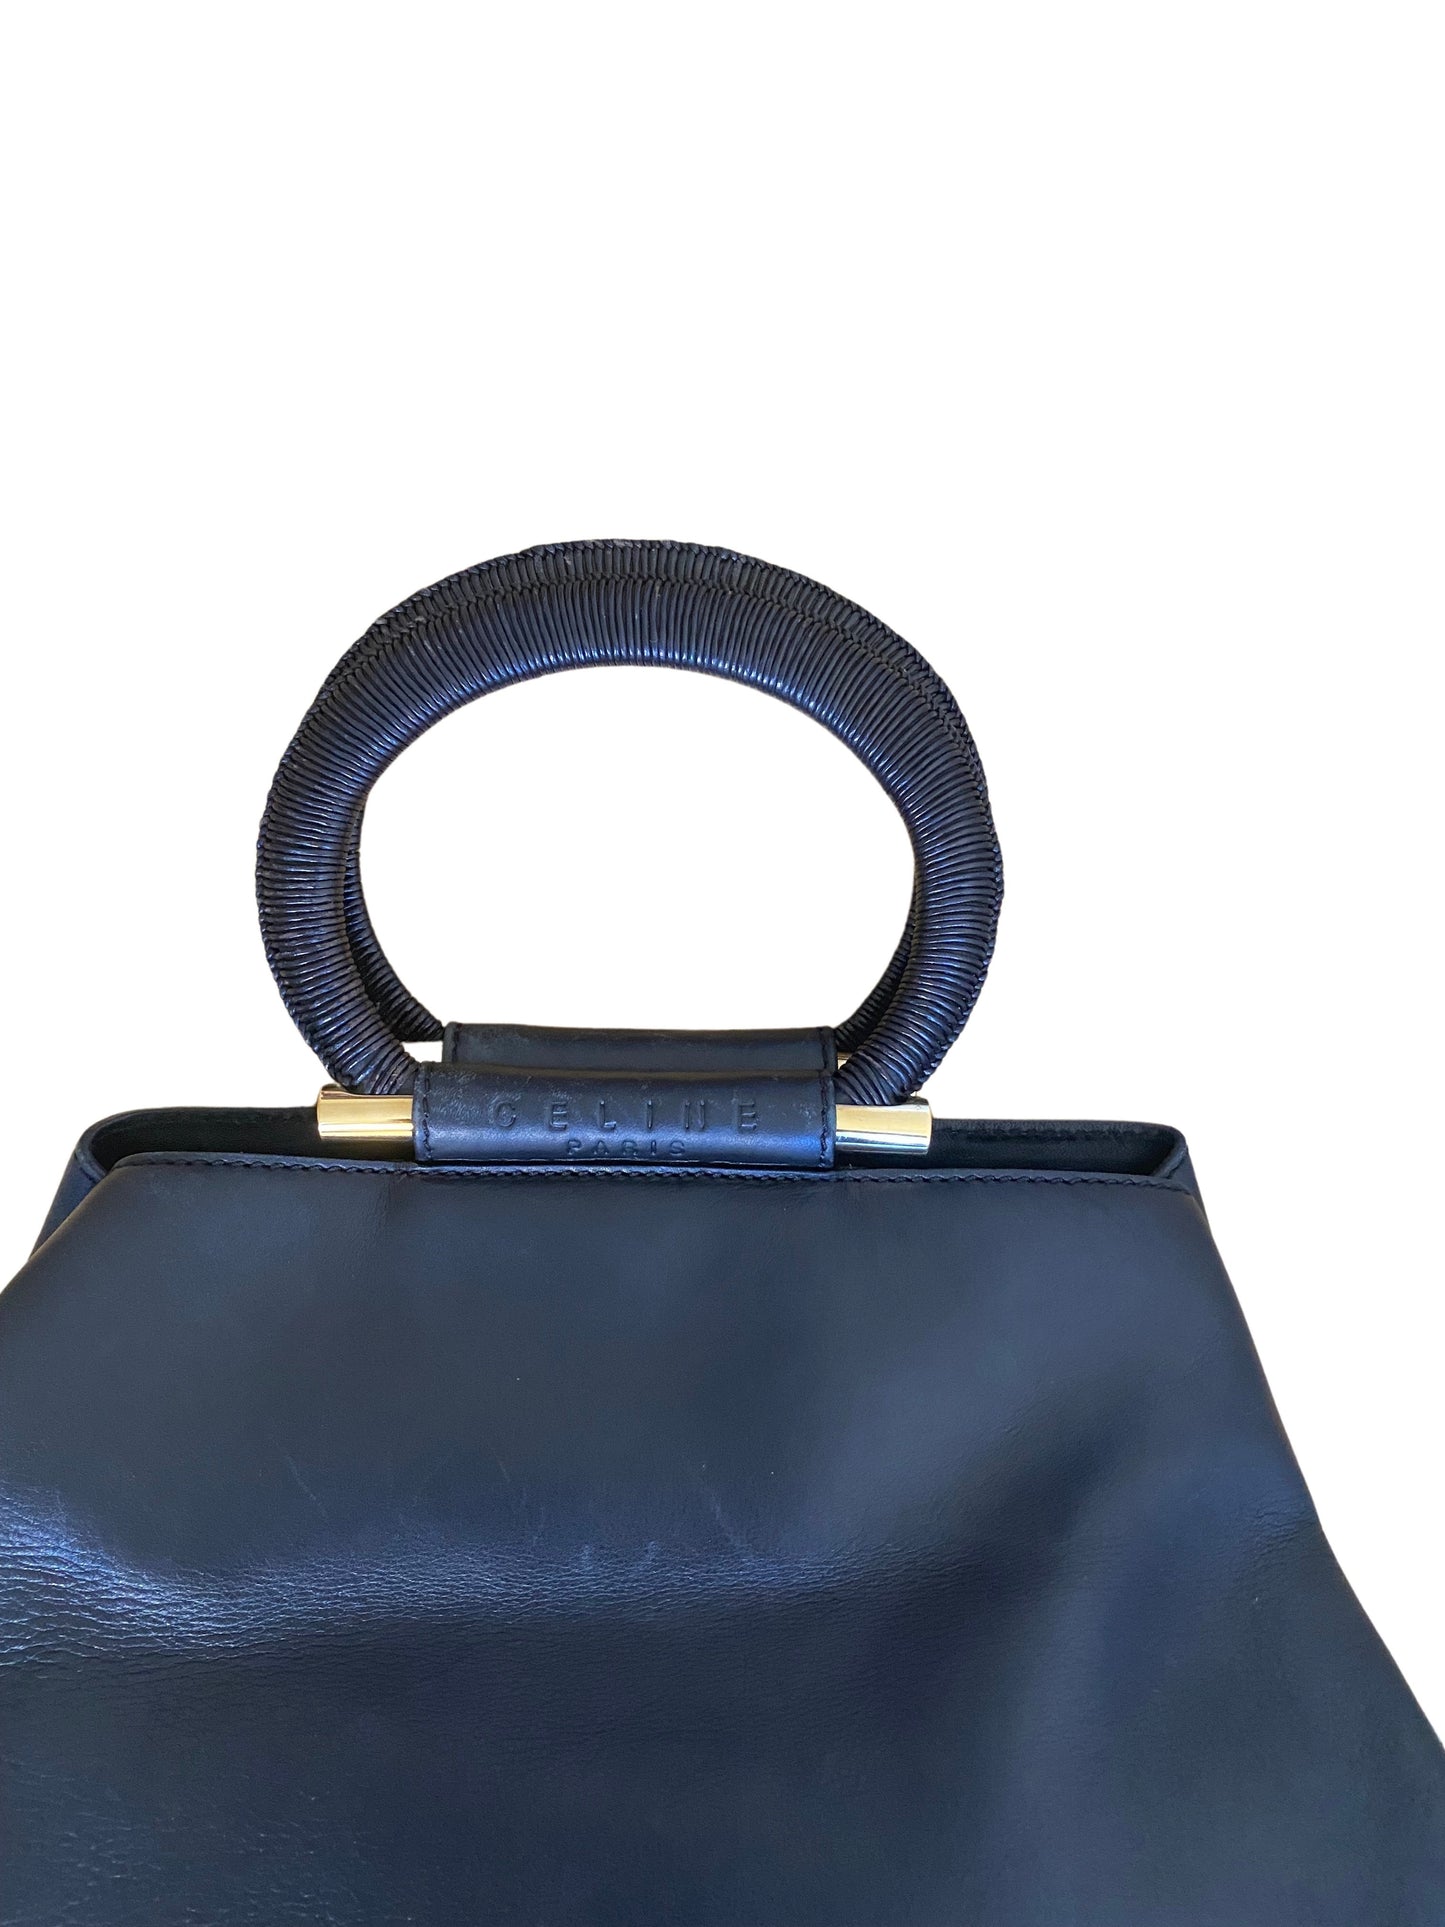 Celine Black Leather Tote Bag